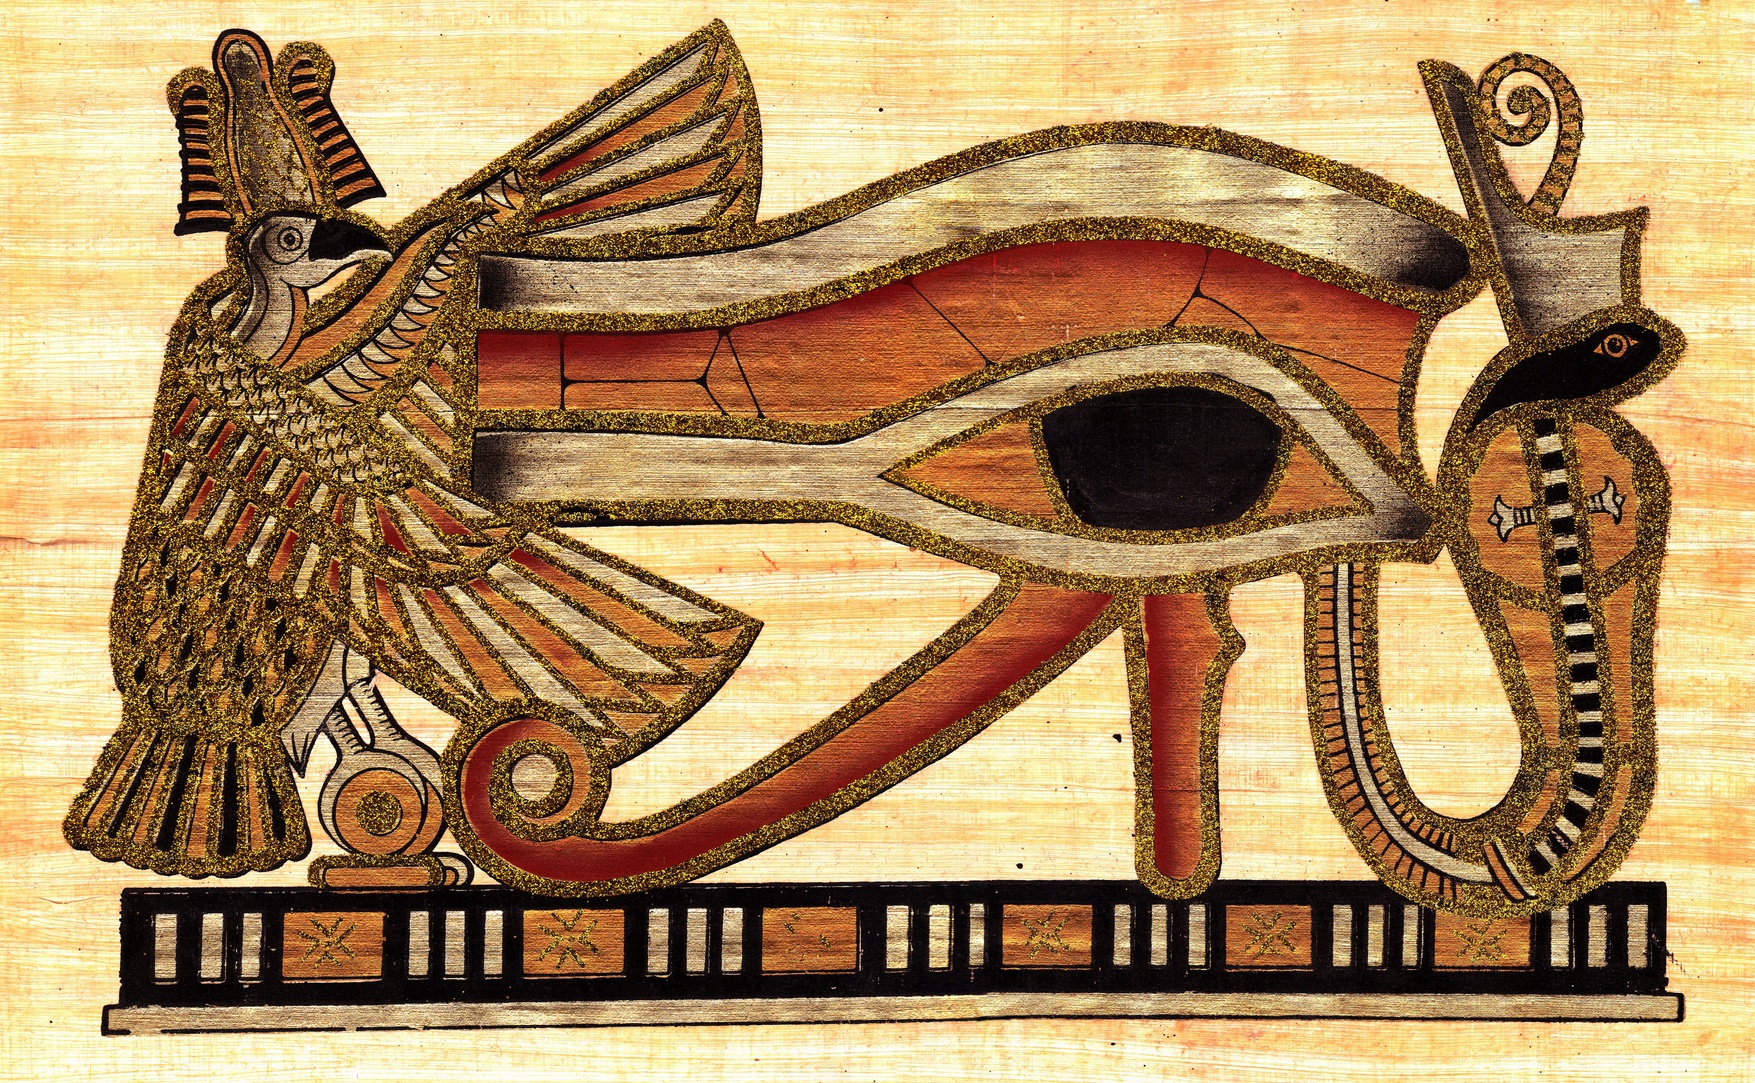 Symbol of Eye of Ra godhood painted at papyrus